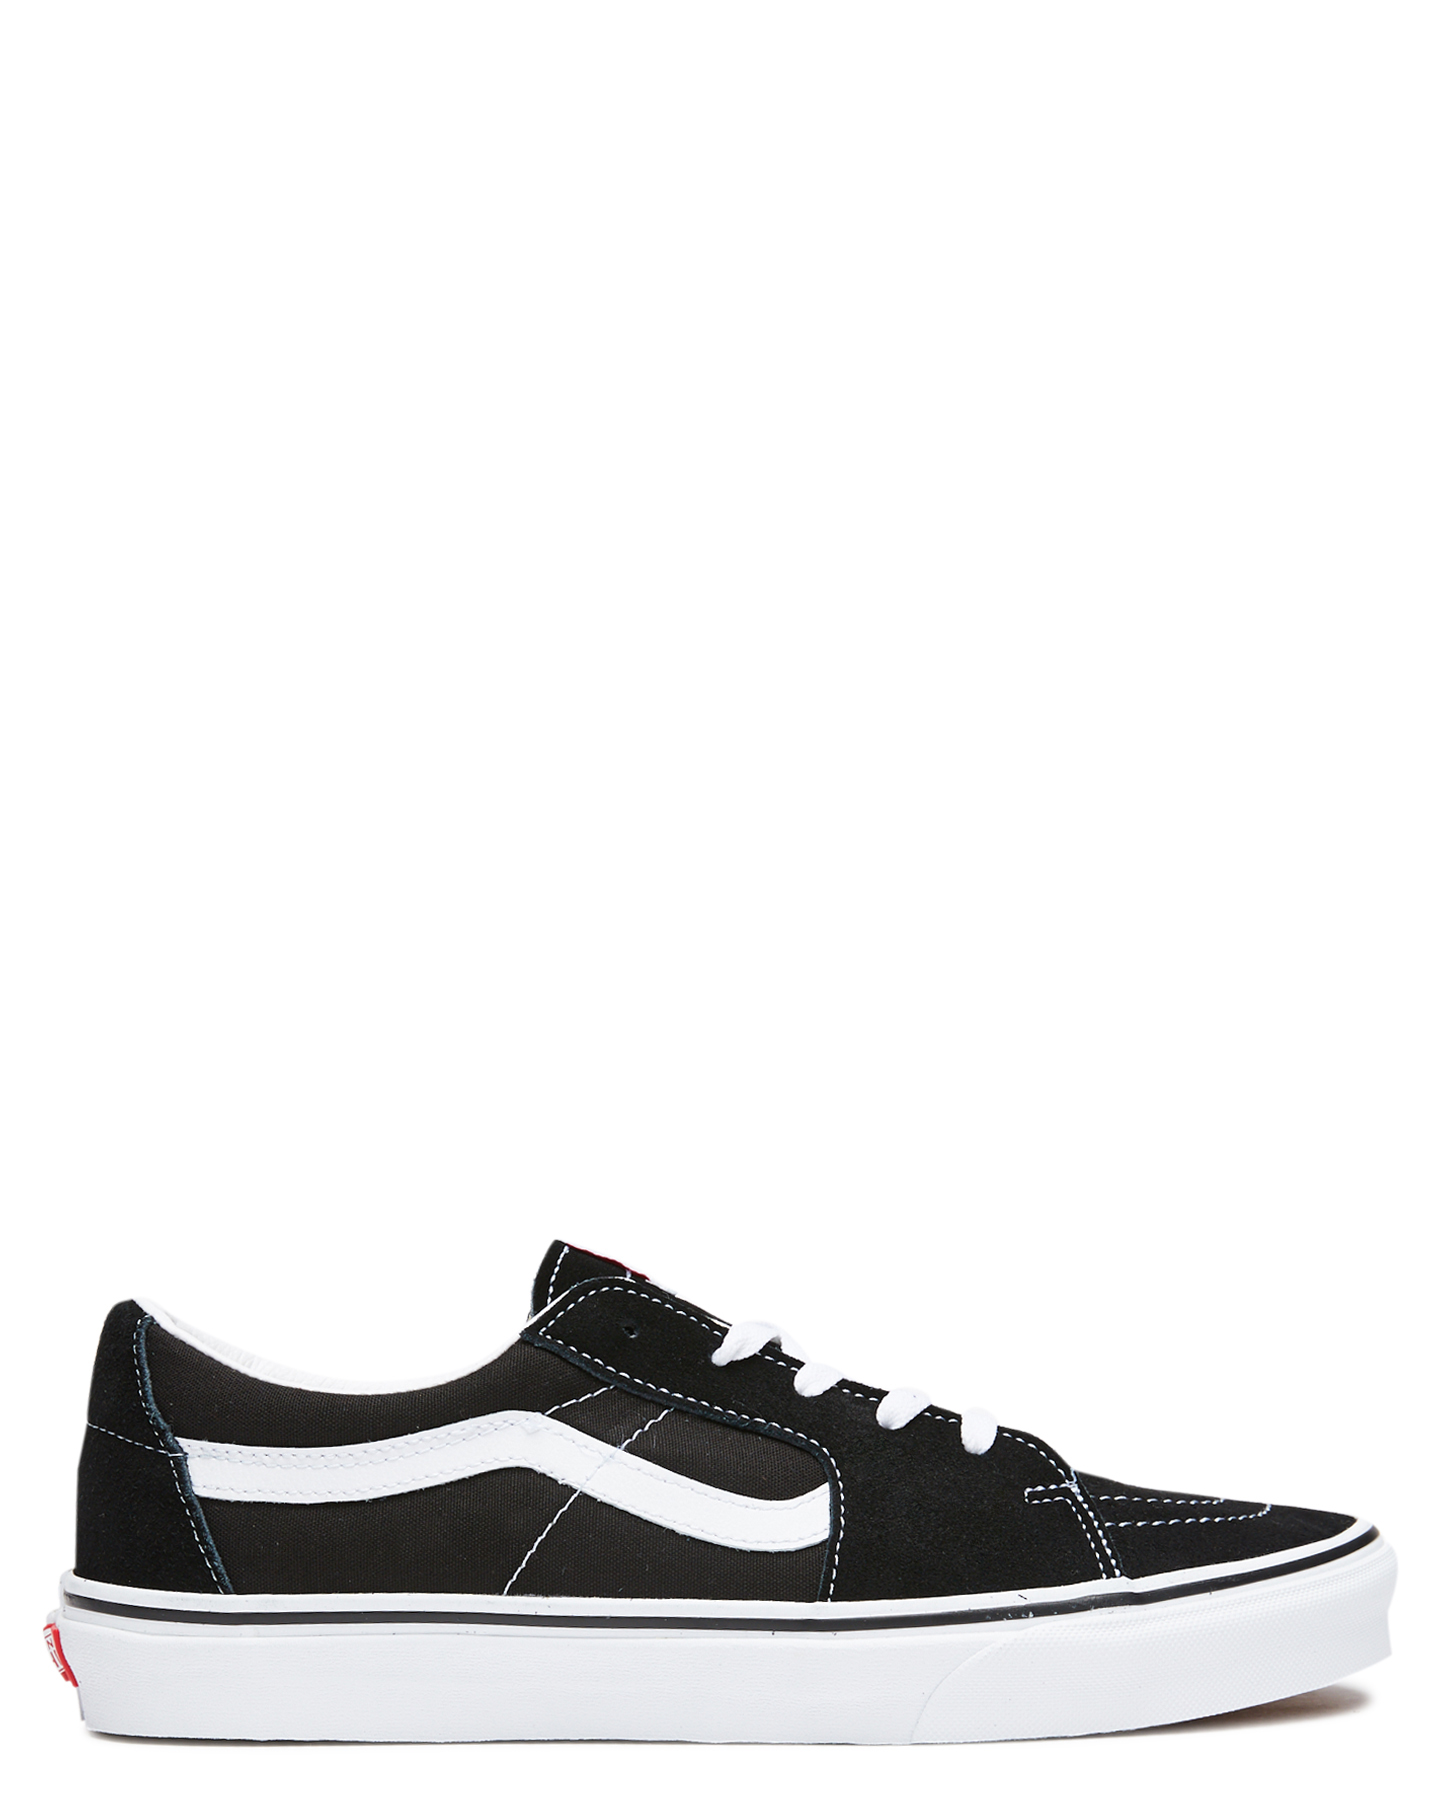 Vans Mens Sk8-Low Shoe - Black True 